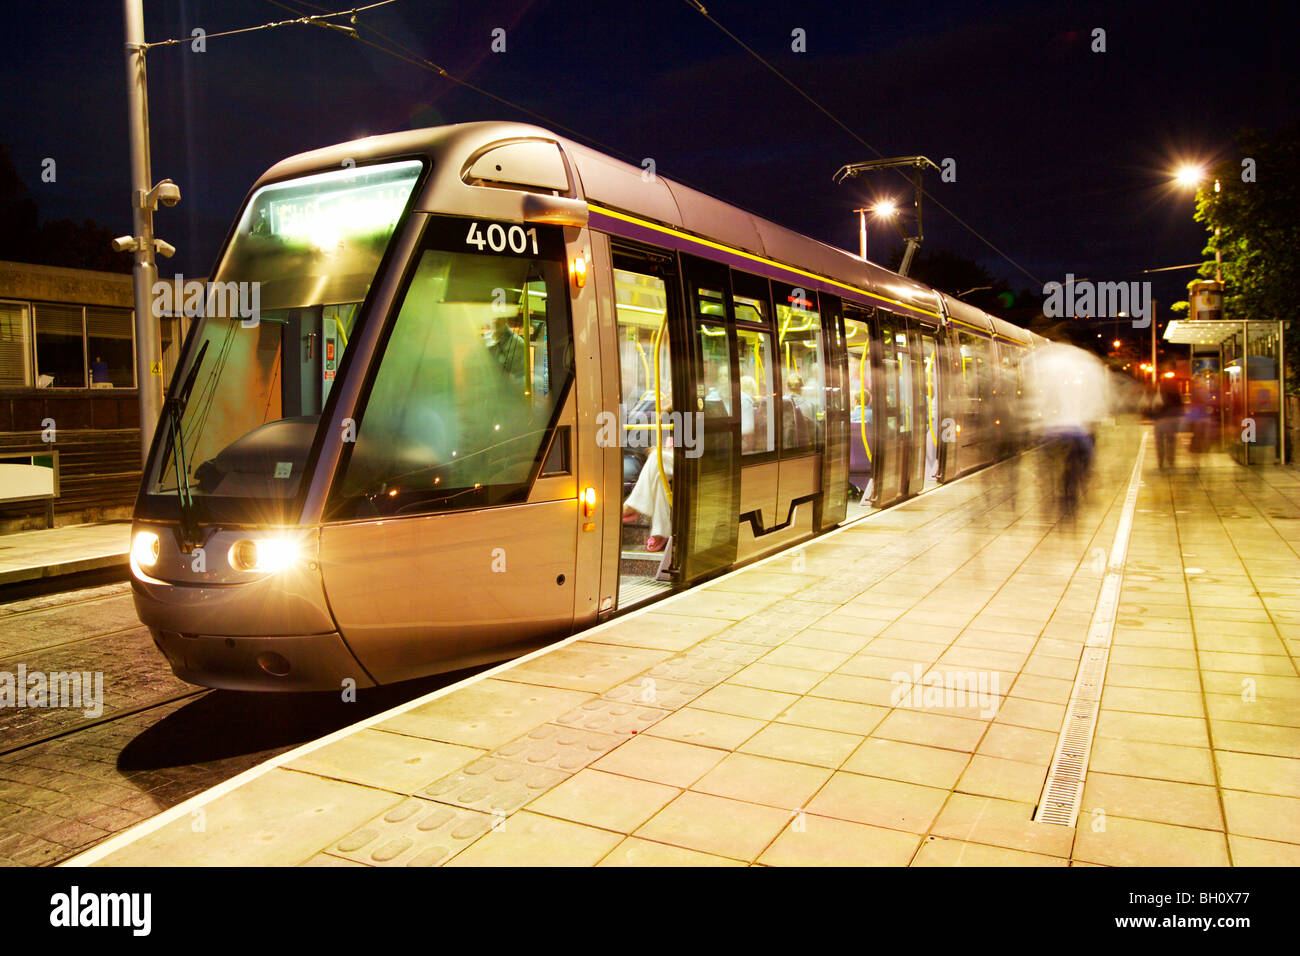 Luas tram, Dundrum, Ireland, Stock Photo